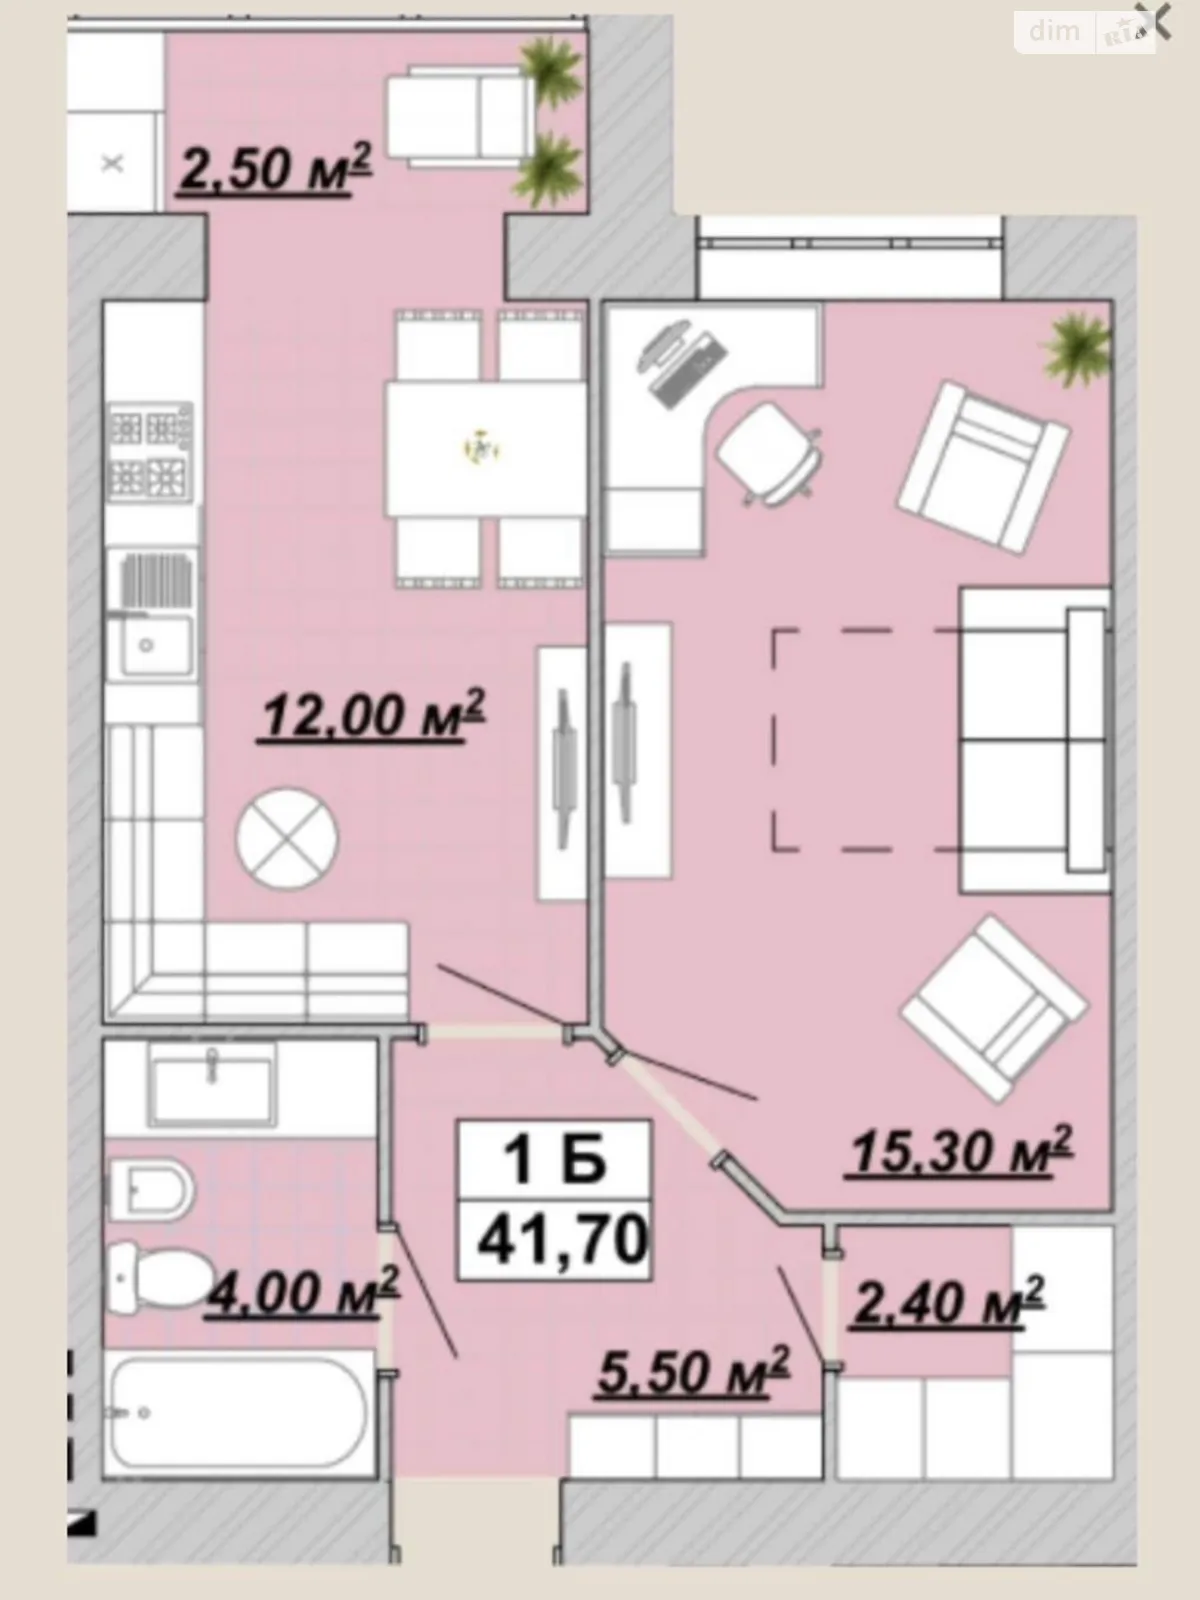 Продается 1-комнатная квартира 41.7 кв. м в Ивано-Франковске - фото 3